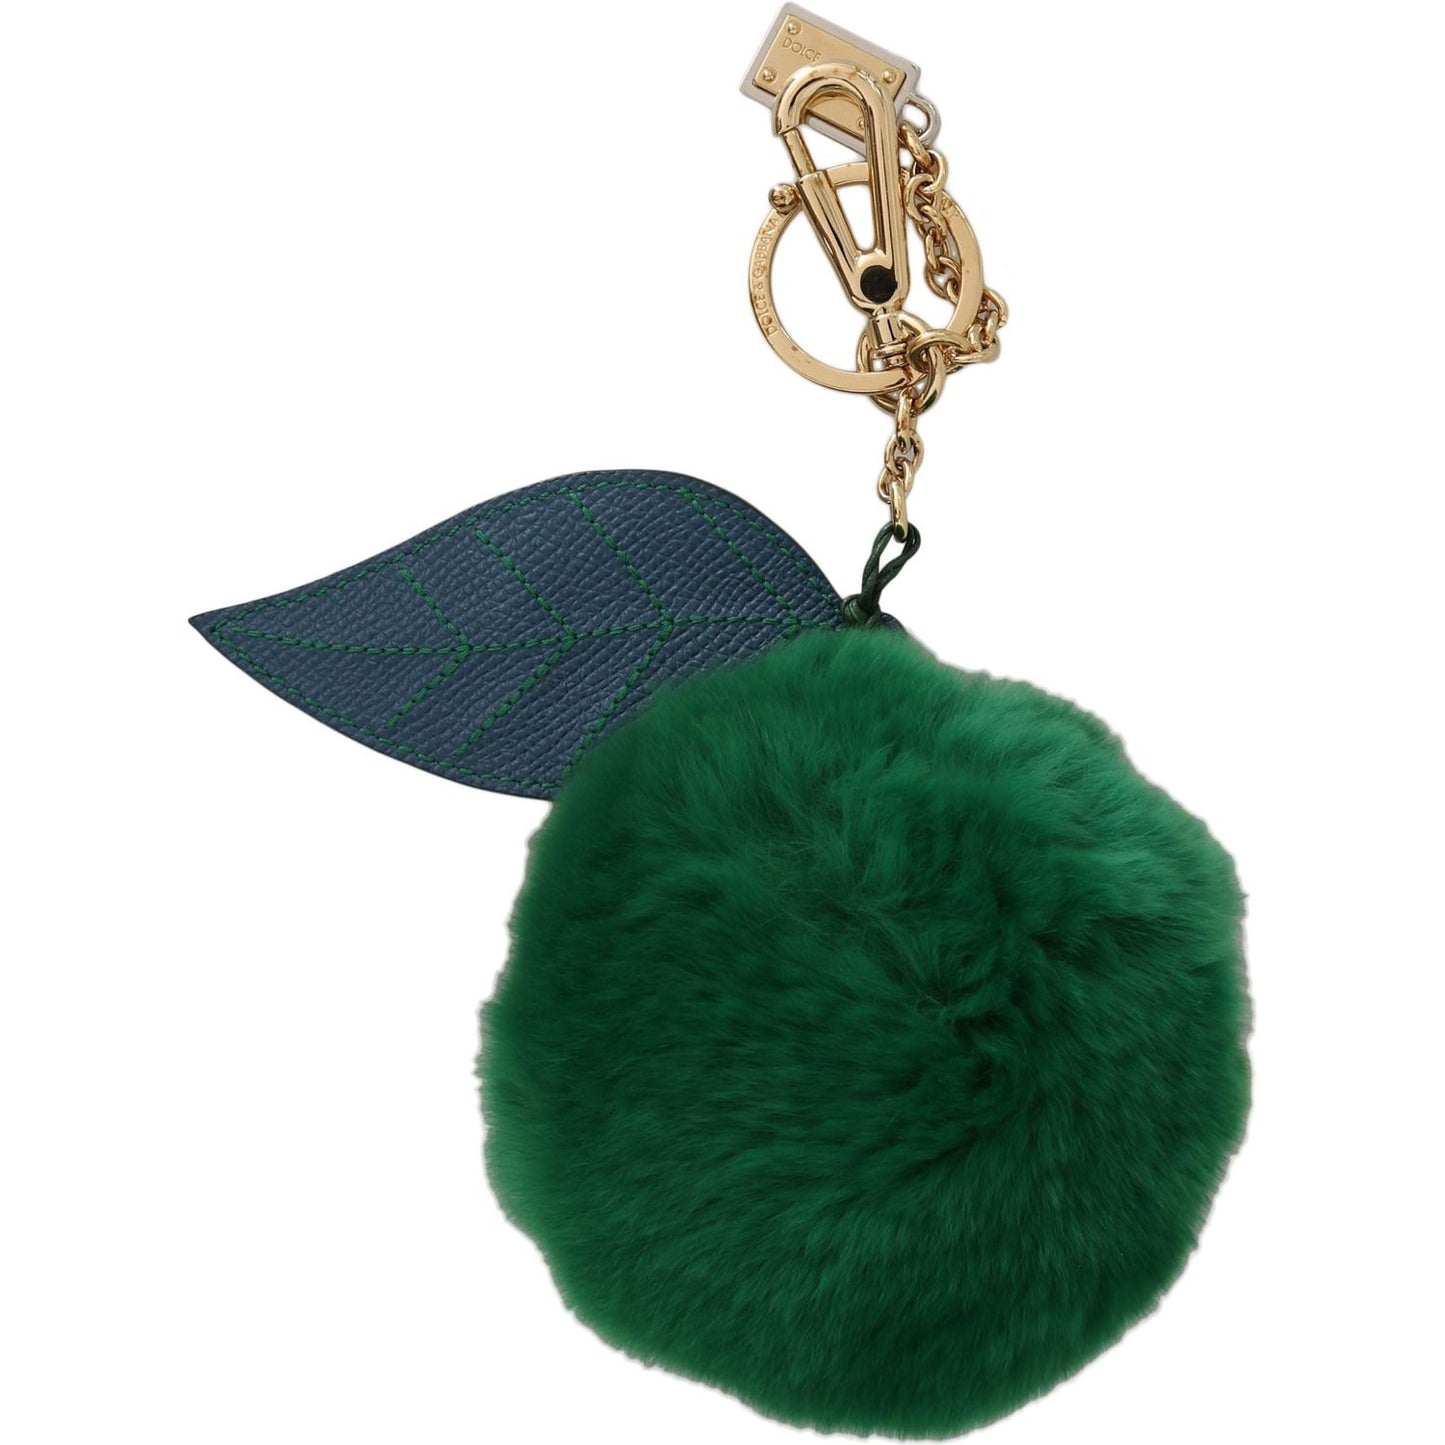 Dolce & Gabbana Elegant Tricolor Fur Ball Keychain green-leather-fur-gold-clasp-keyring-women-keychain Keychain IMG_1638-scaled-75650197-e73.jpg